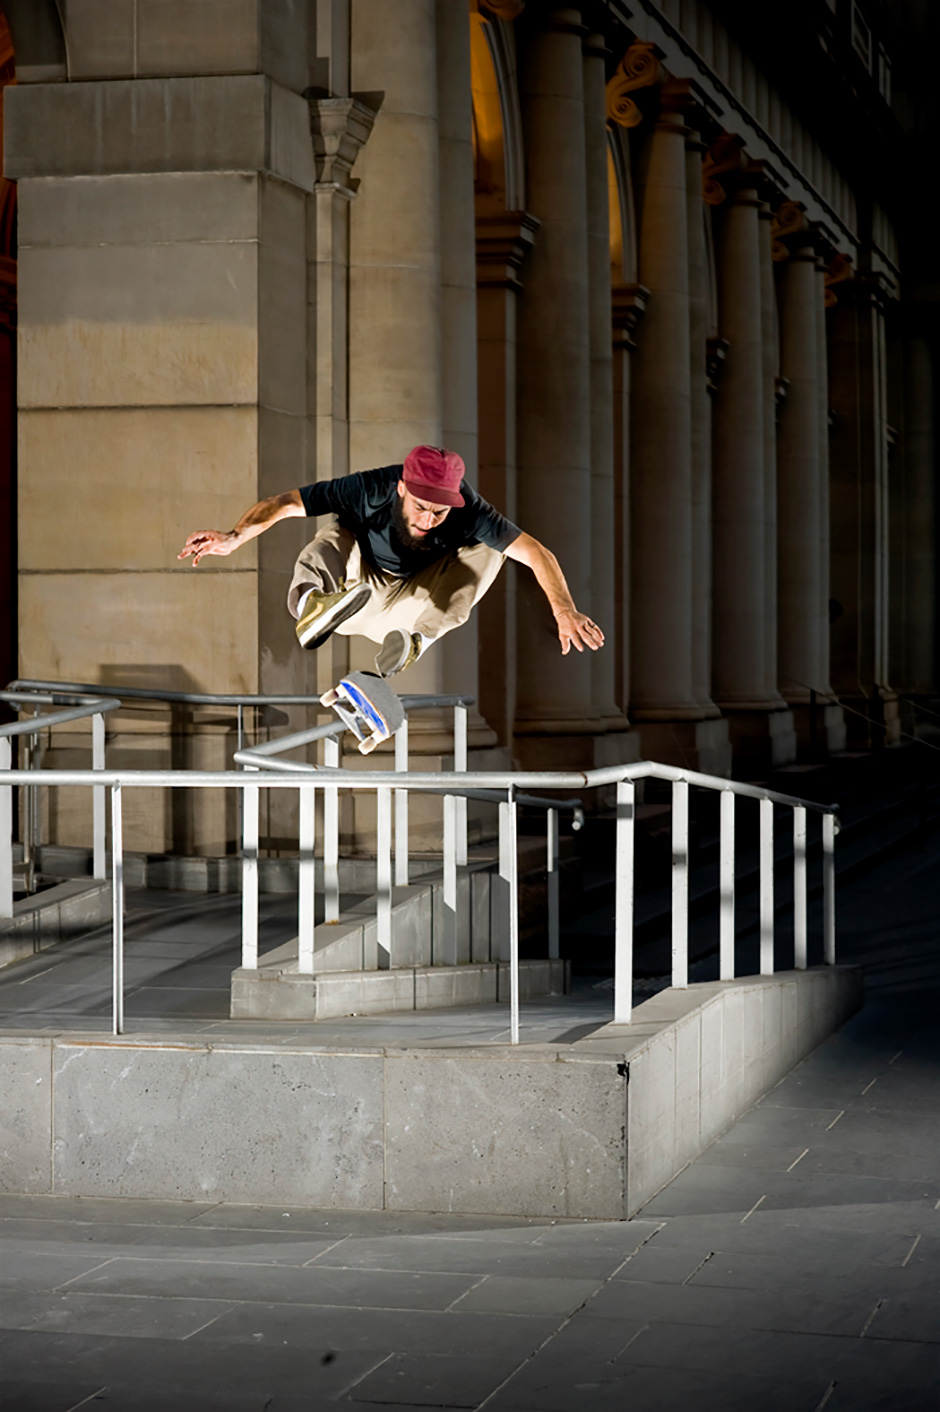 Nick Boserio's kickflips a bump to bar in Melbourne for Zach Malfa-Kowalski's lens